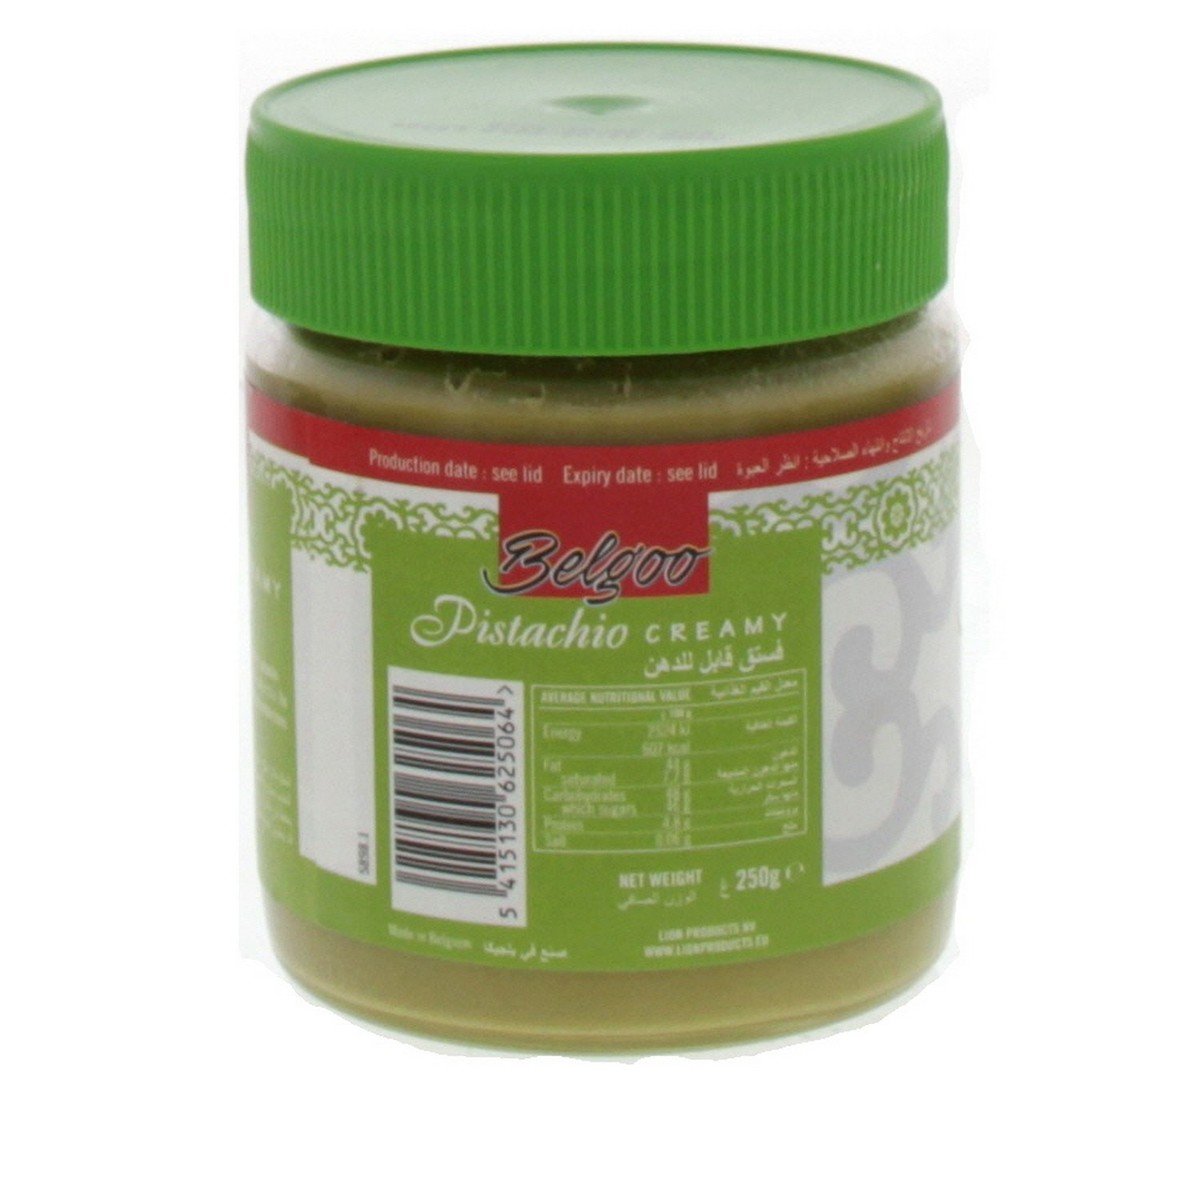 Belgoo Pistachio Creamy Spread 250 g